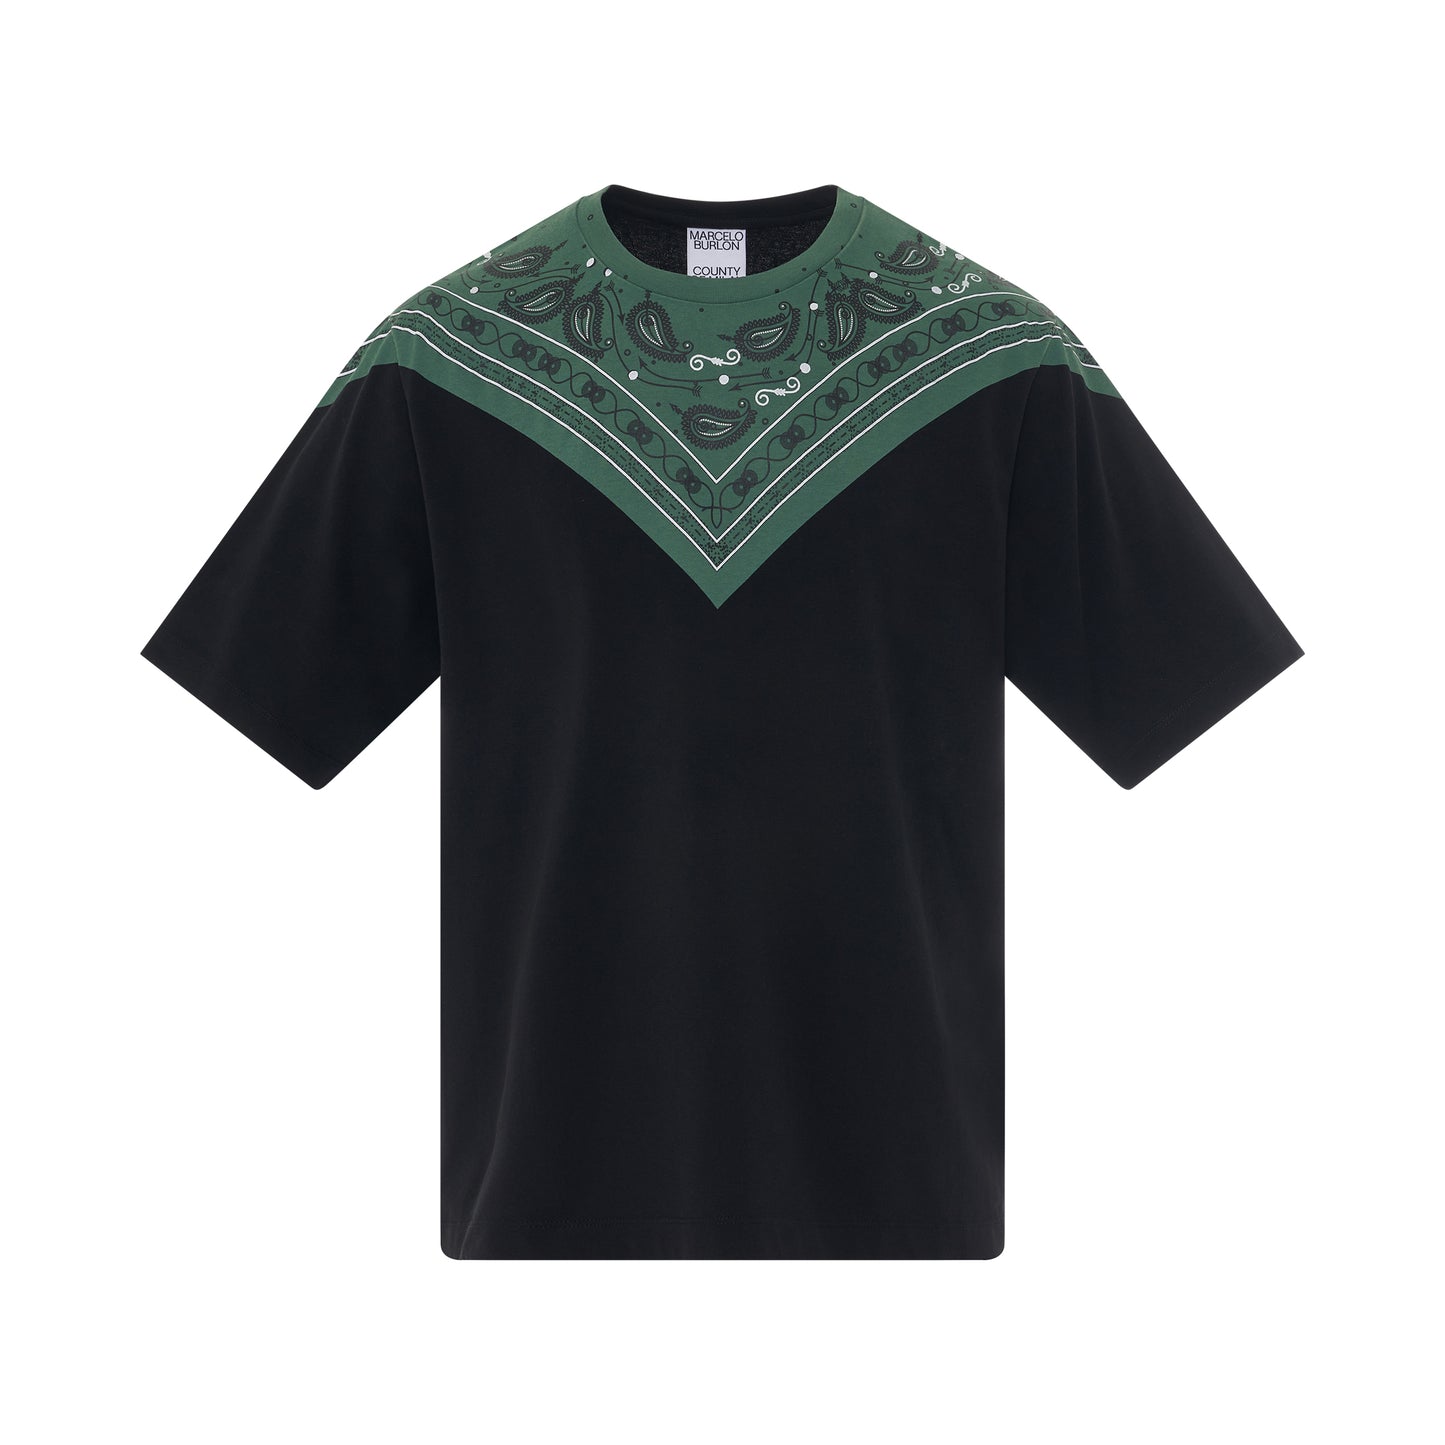 Bandana Oversized T-Shirt in Black/Green